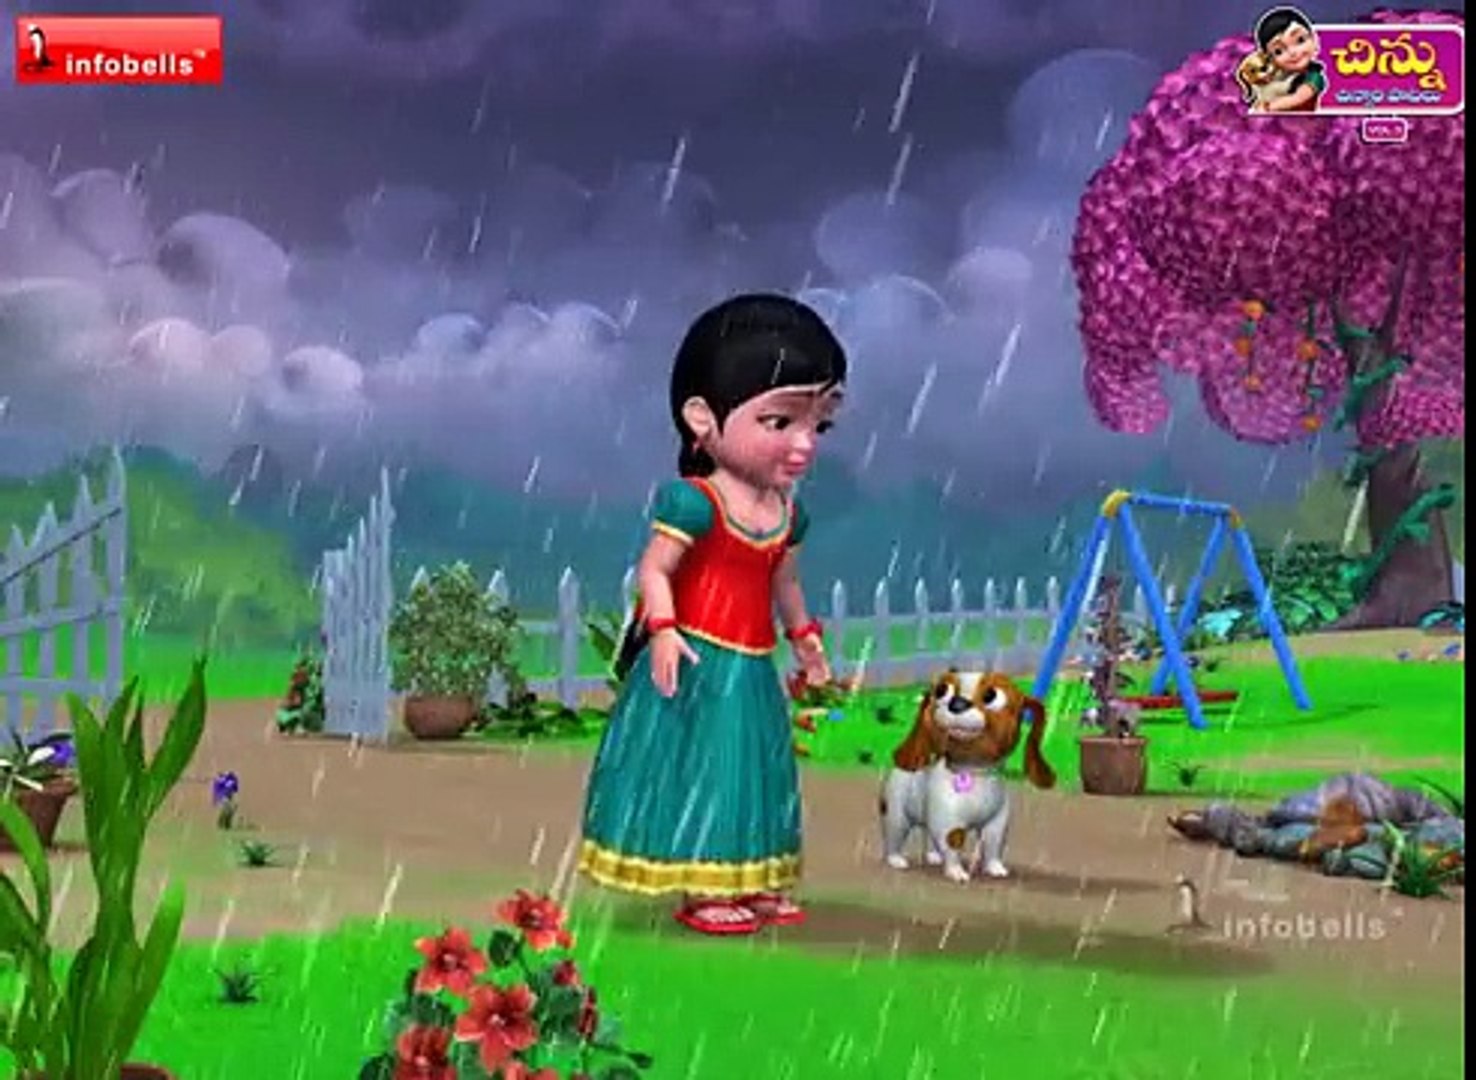 The Rain Song   Chinnu Telugu Rhymes for Children   Infobells ... Hol dir